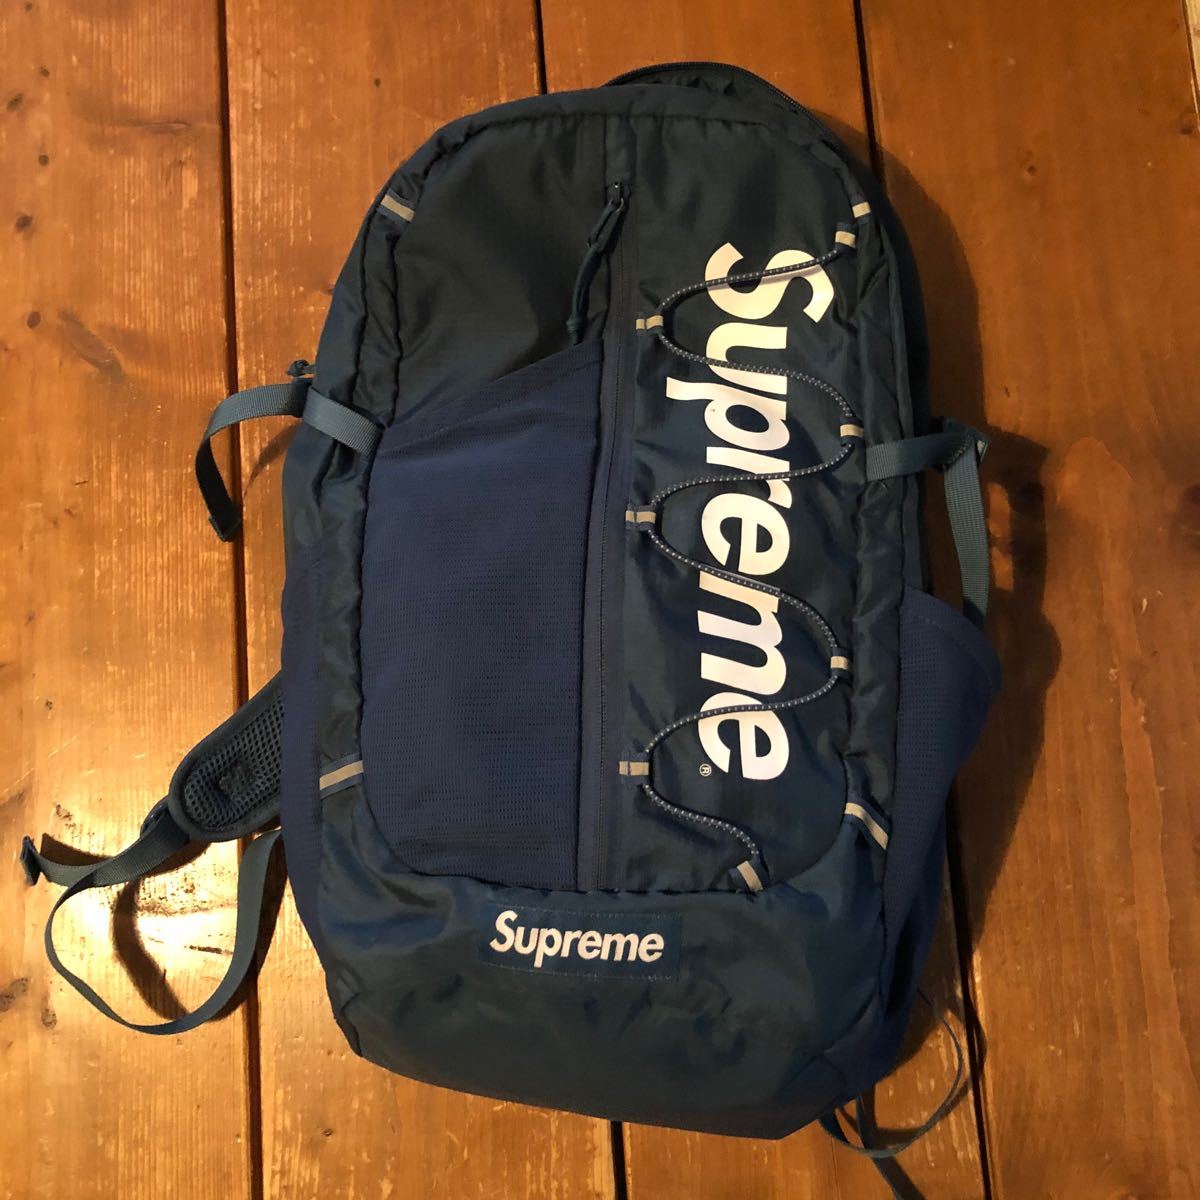 Supreme Backpack 17ss